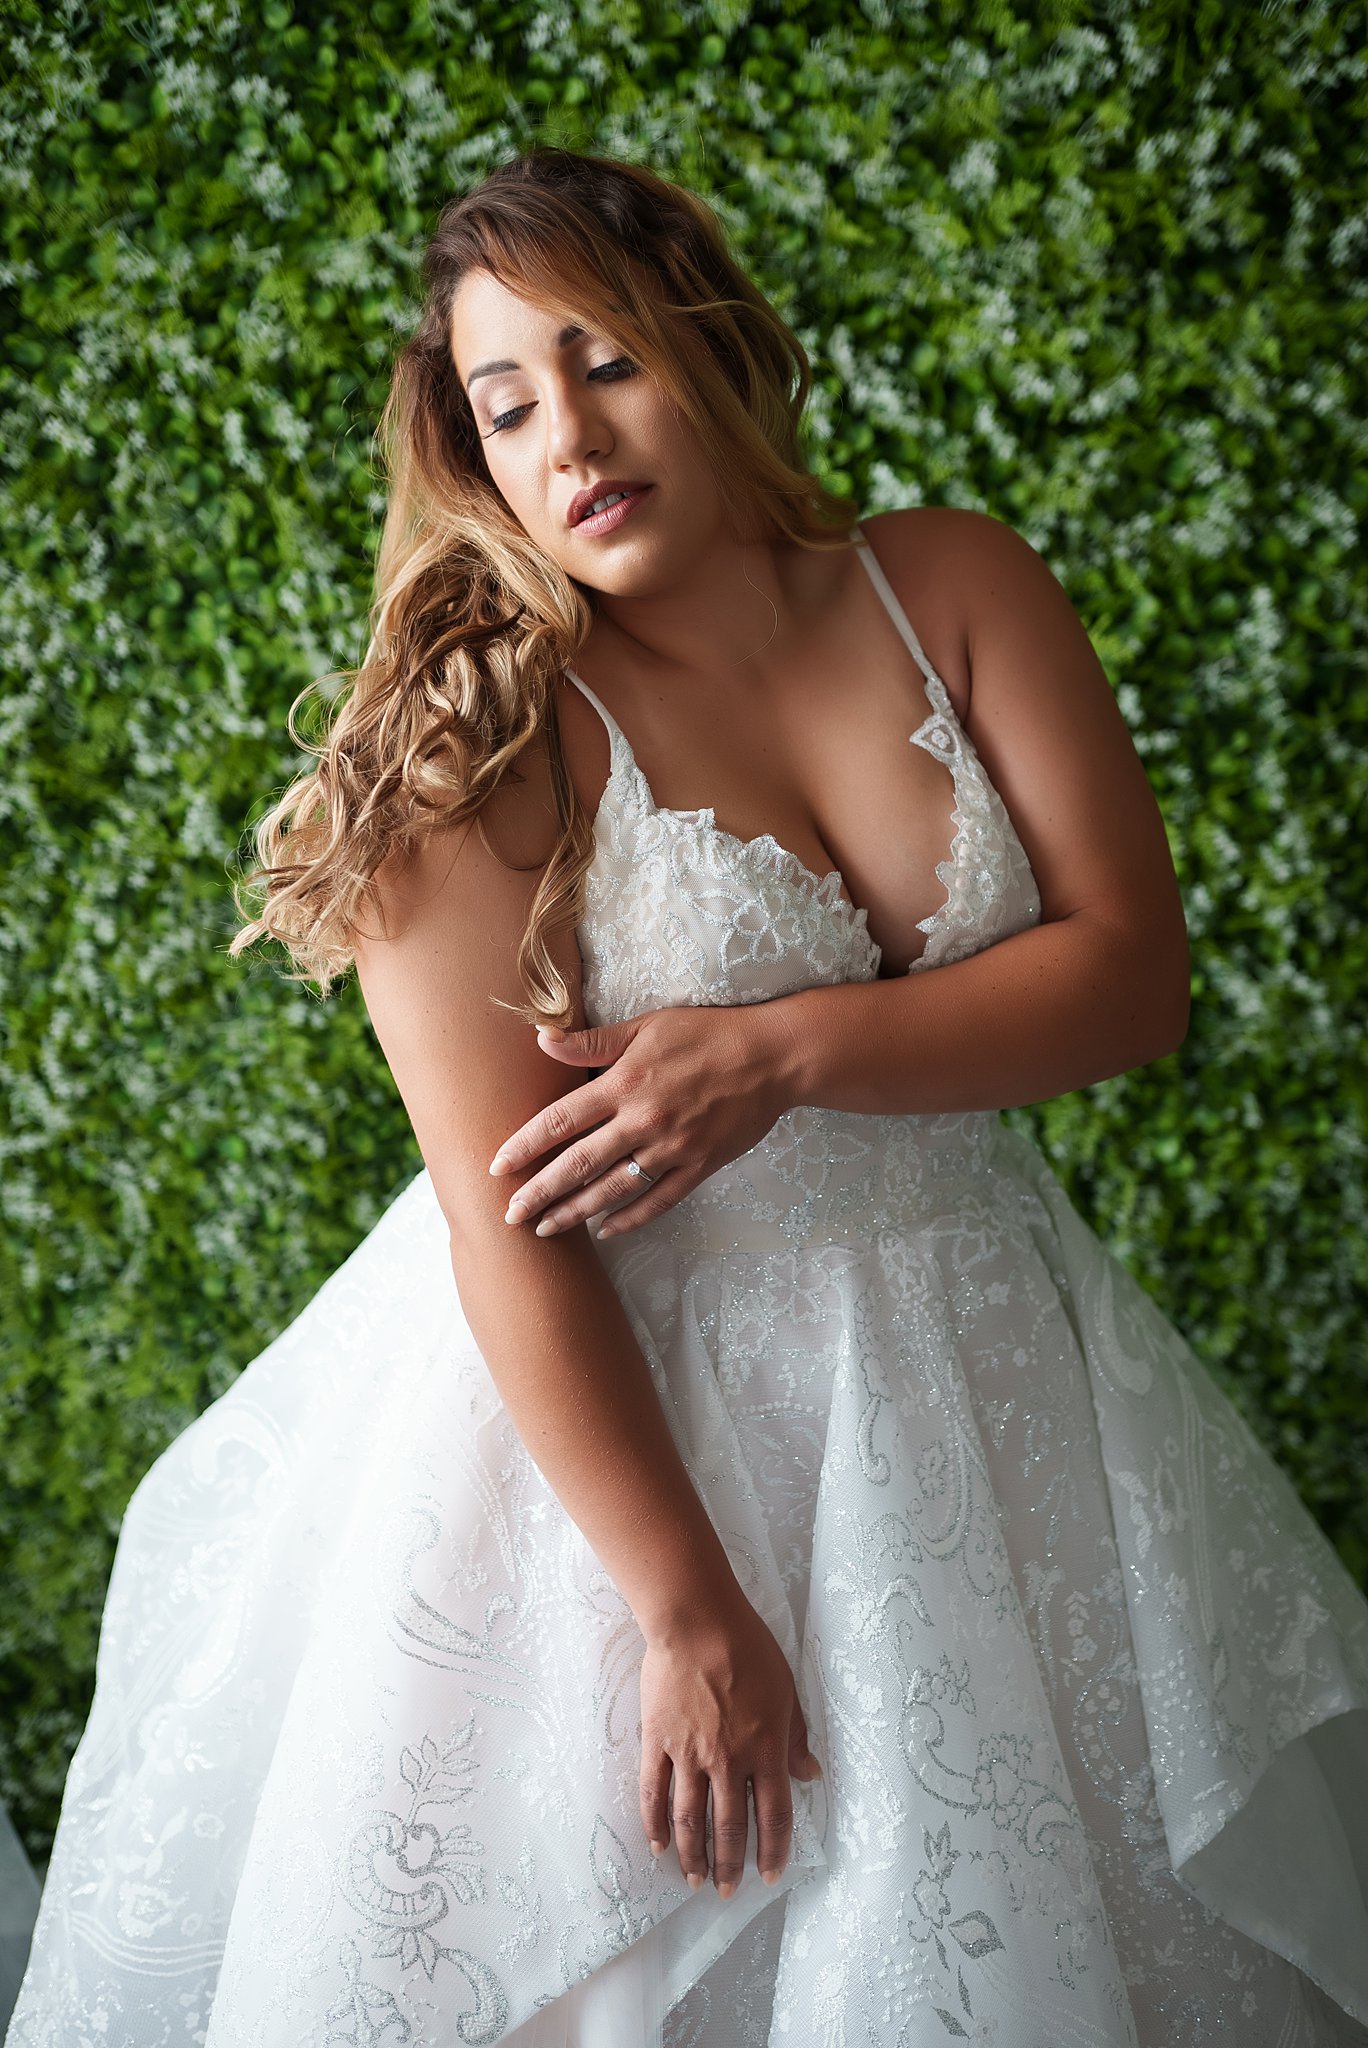 Miss J’s wedding boudoir photo shoot